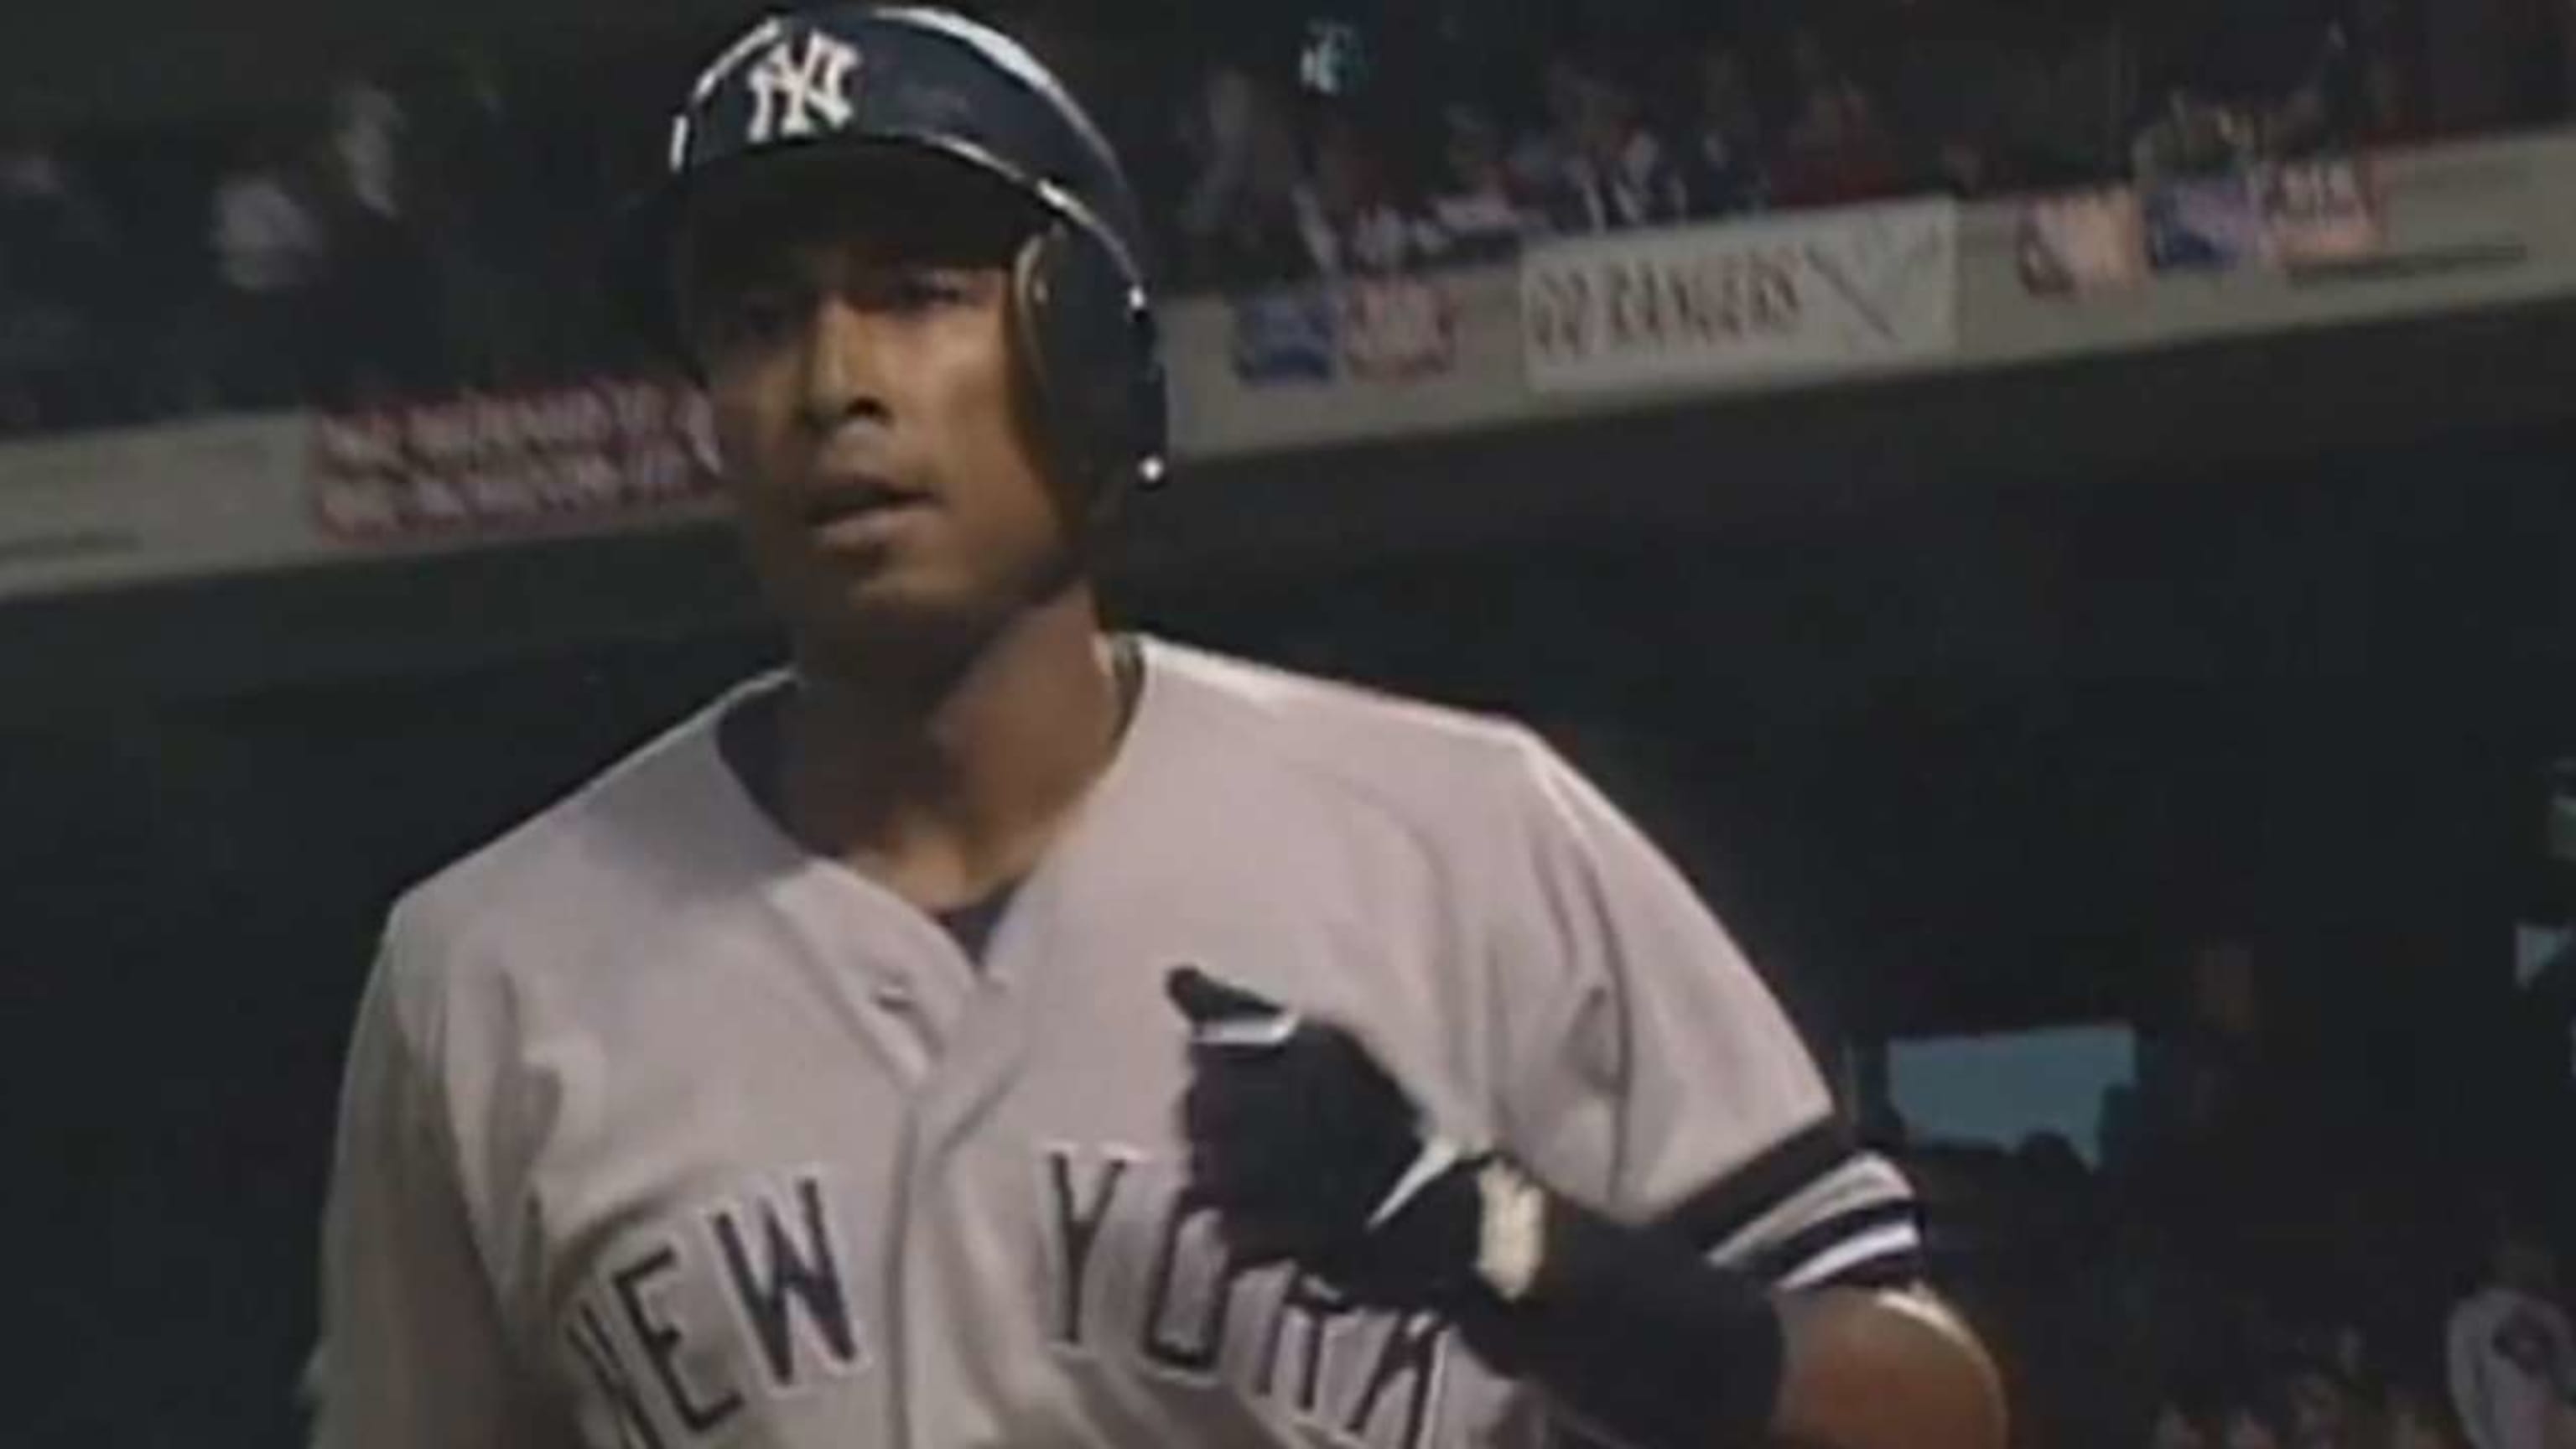 1998 Bernie Williams World Series Worn & Signed New York Yankees